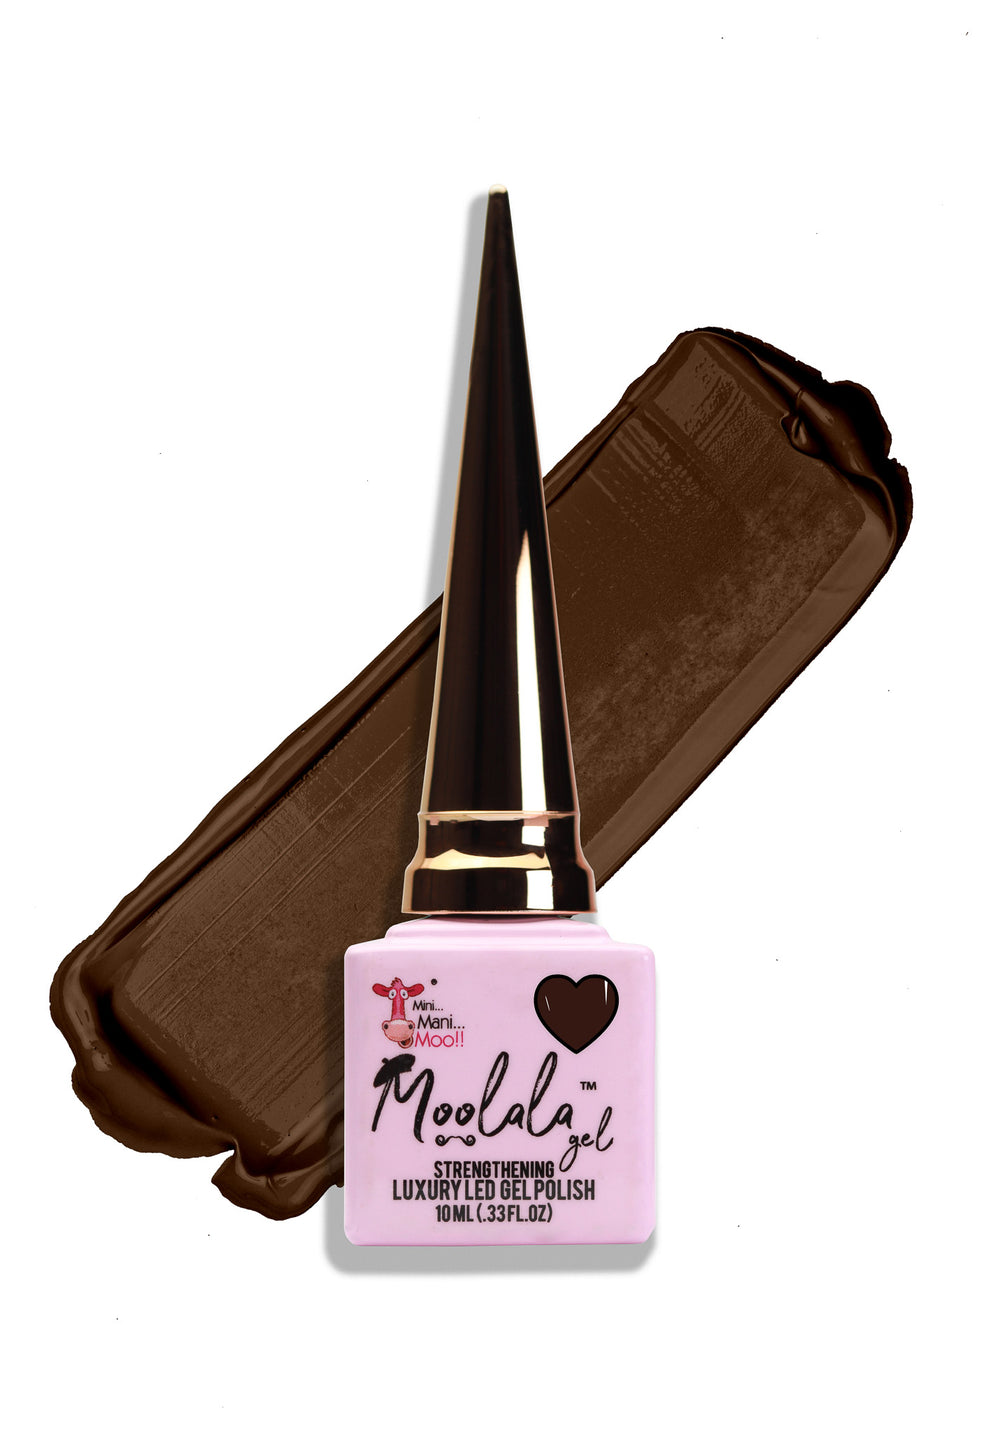 Moolala™ 2 Step Gel - #22 Cocoa Powder